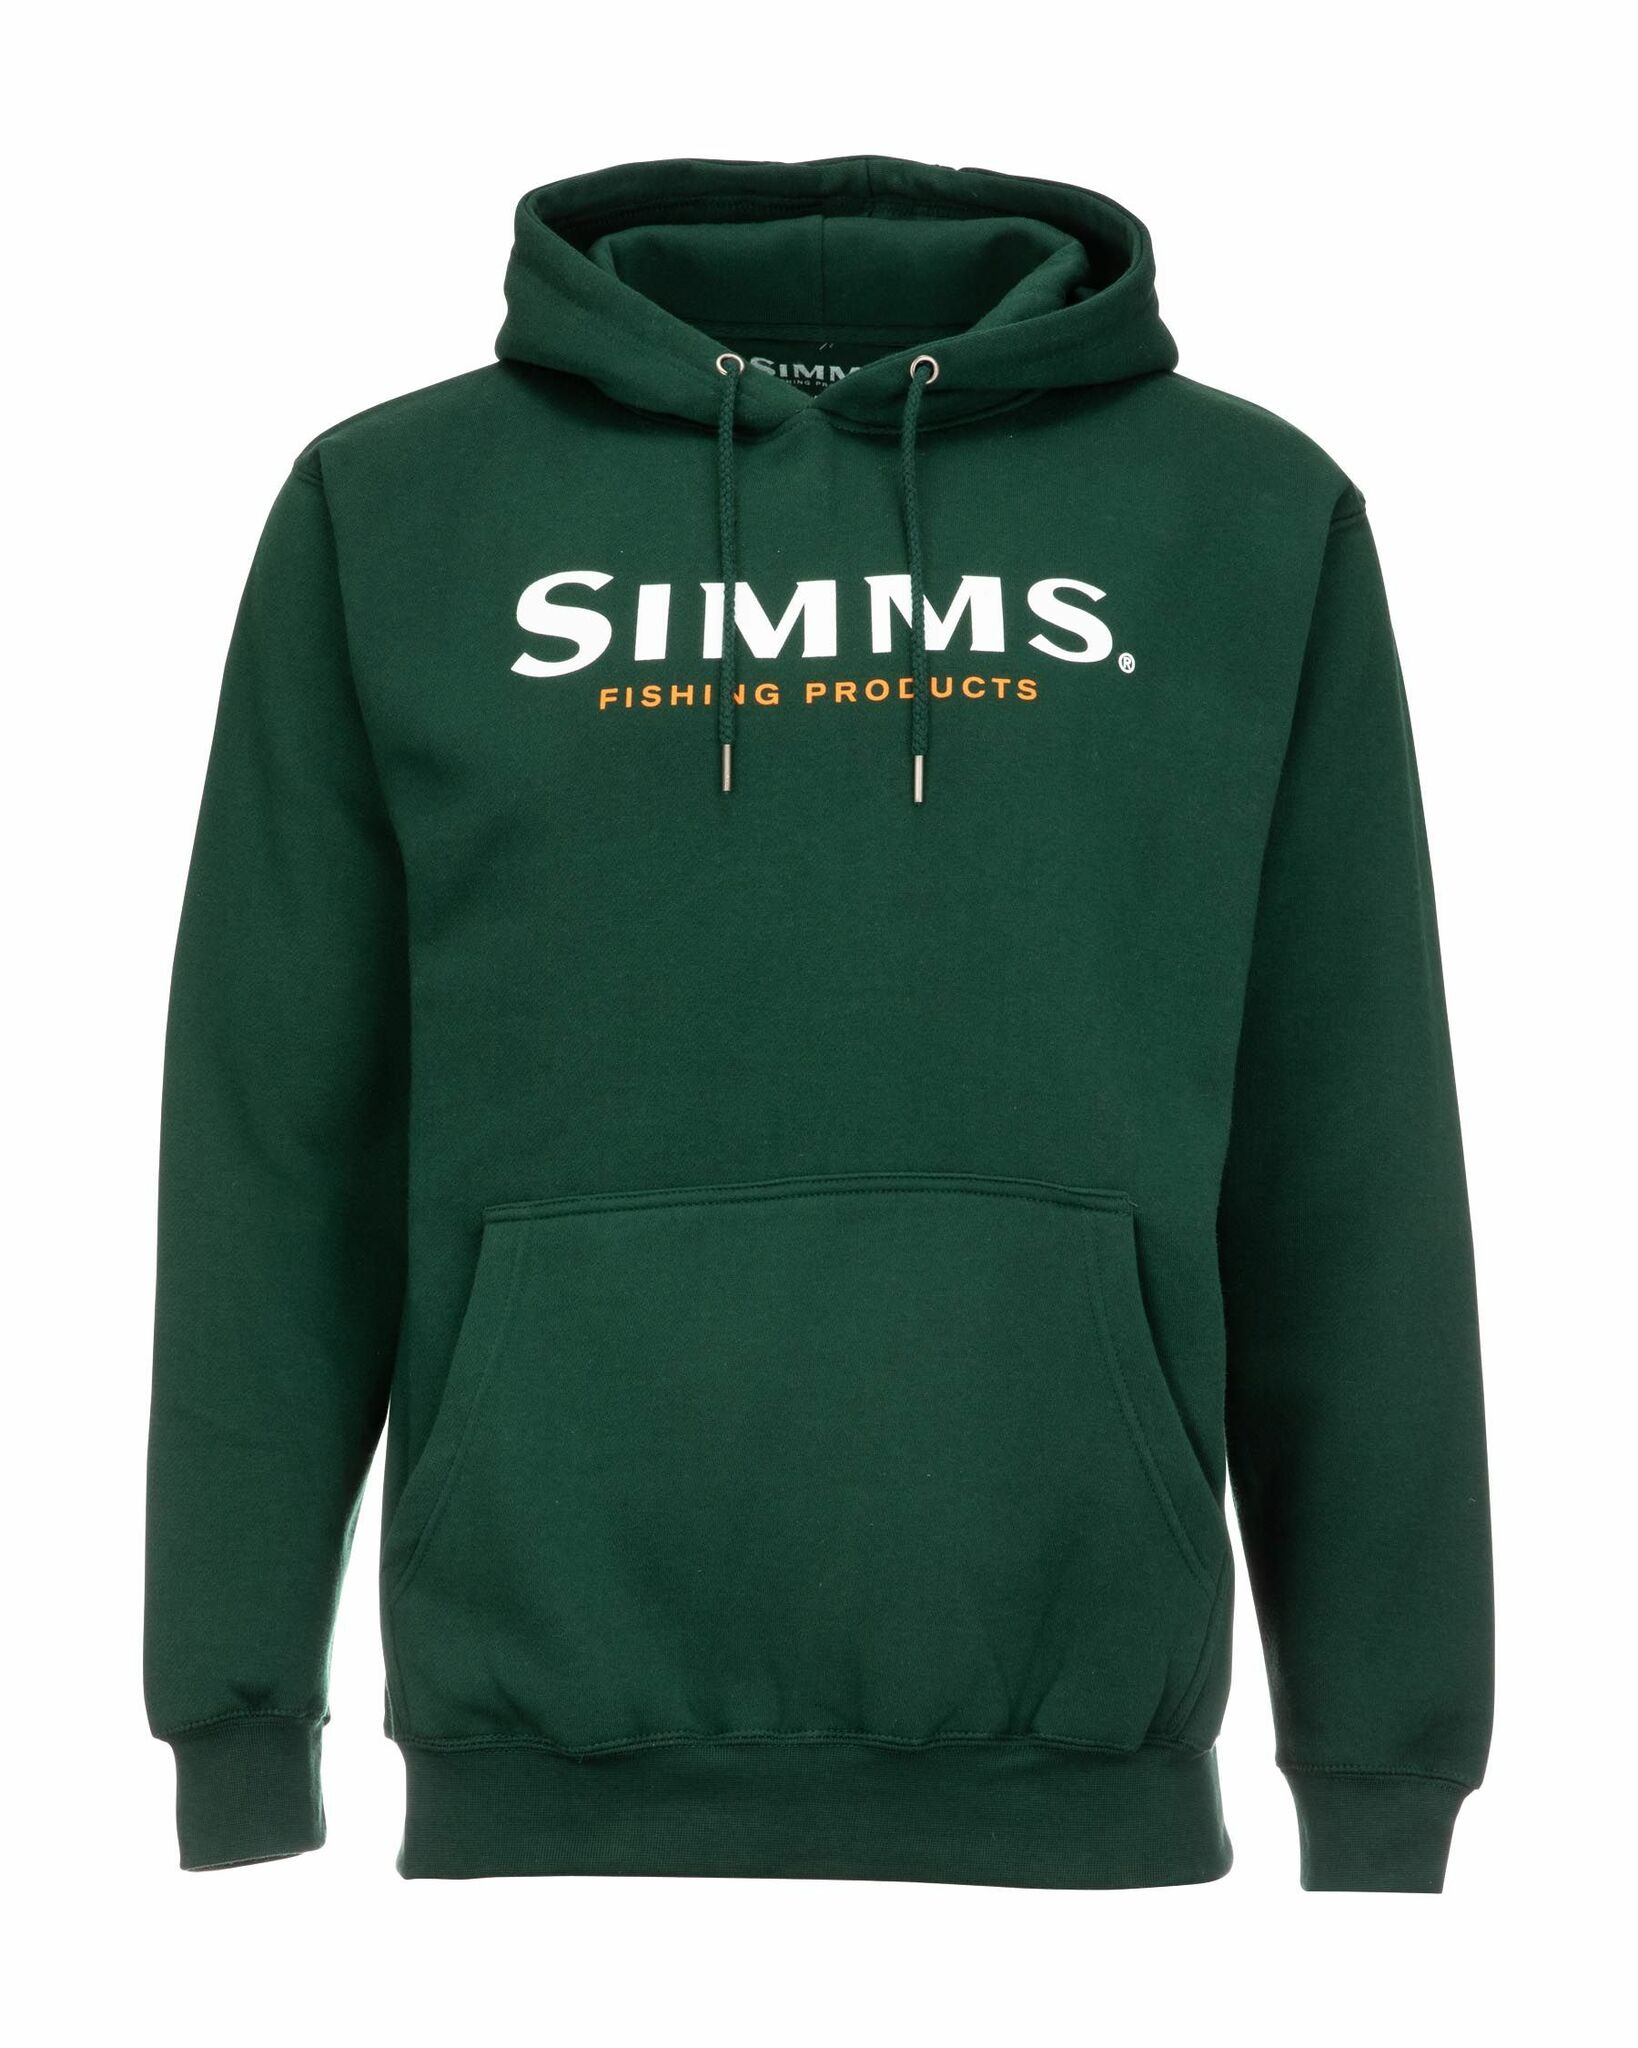 Simms Logo Hoody - Forest